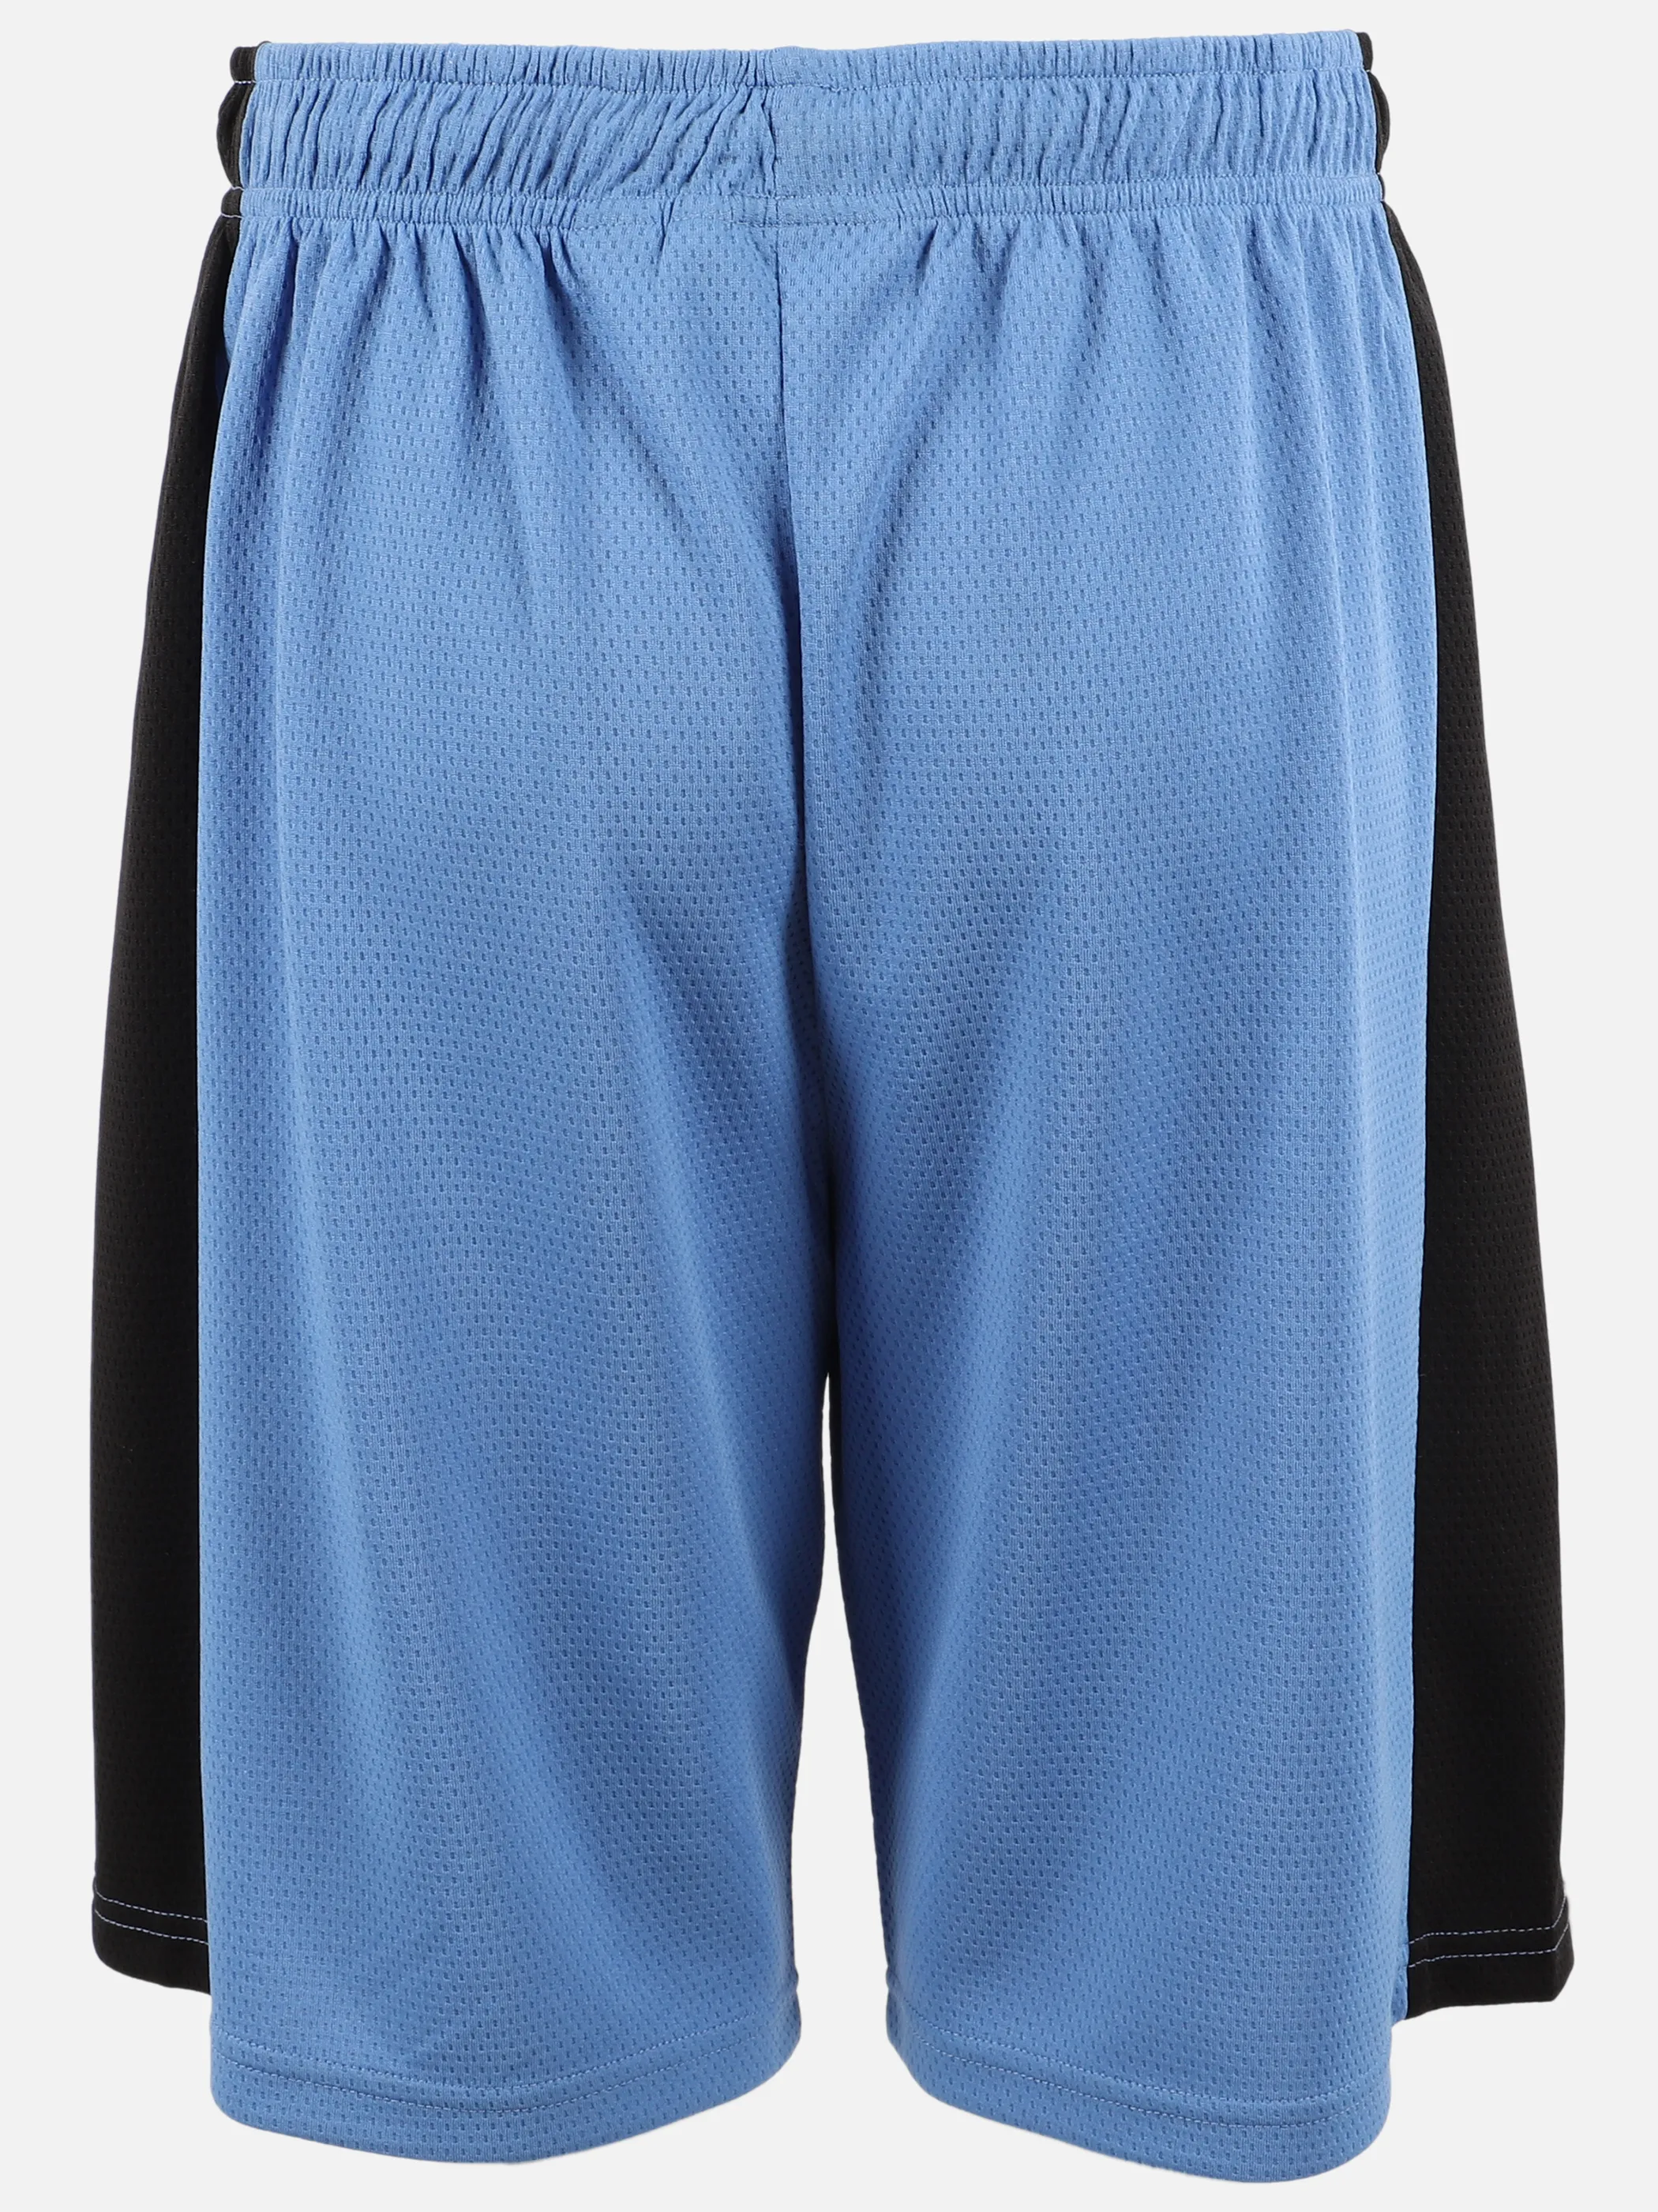 Stop + Go TB-Basketball Shorts Blau 890095 BLUE 2